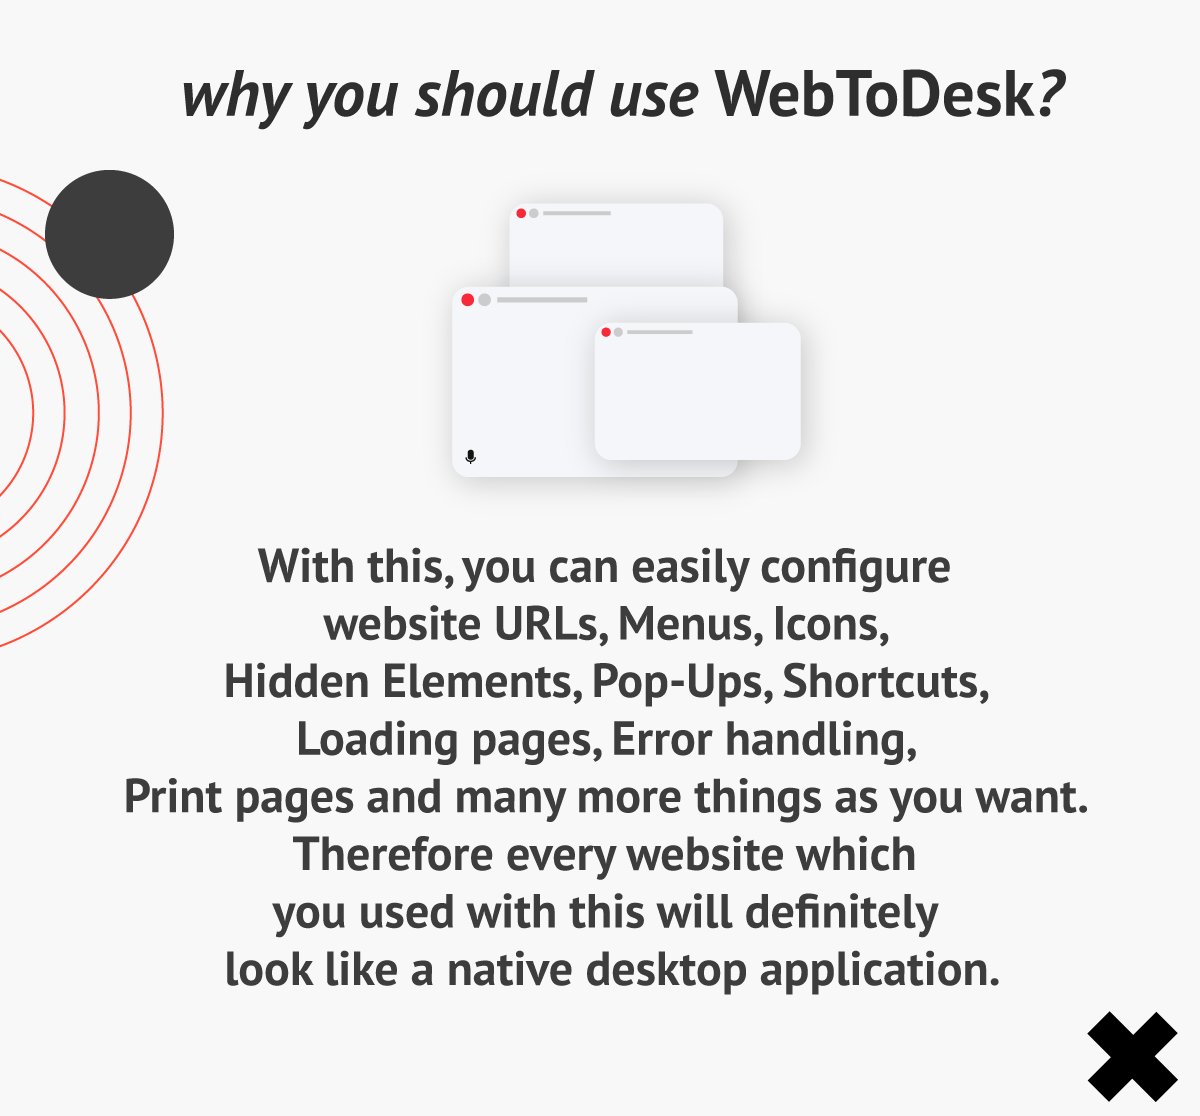 WebToDesk - Convert Your Website to a Native Desktop Application - 2